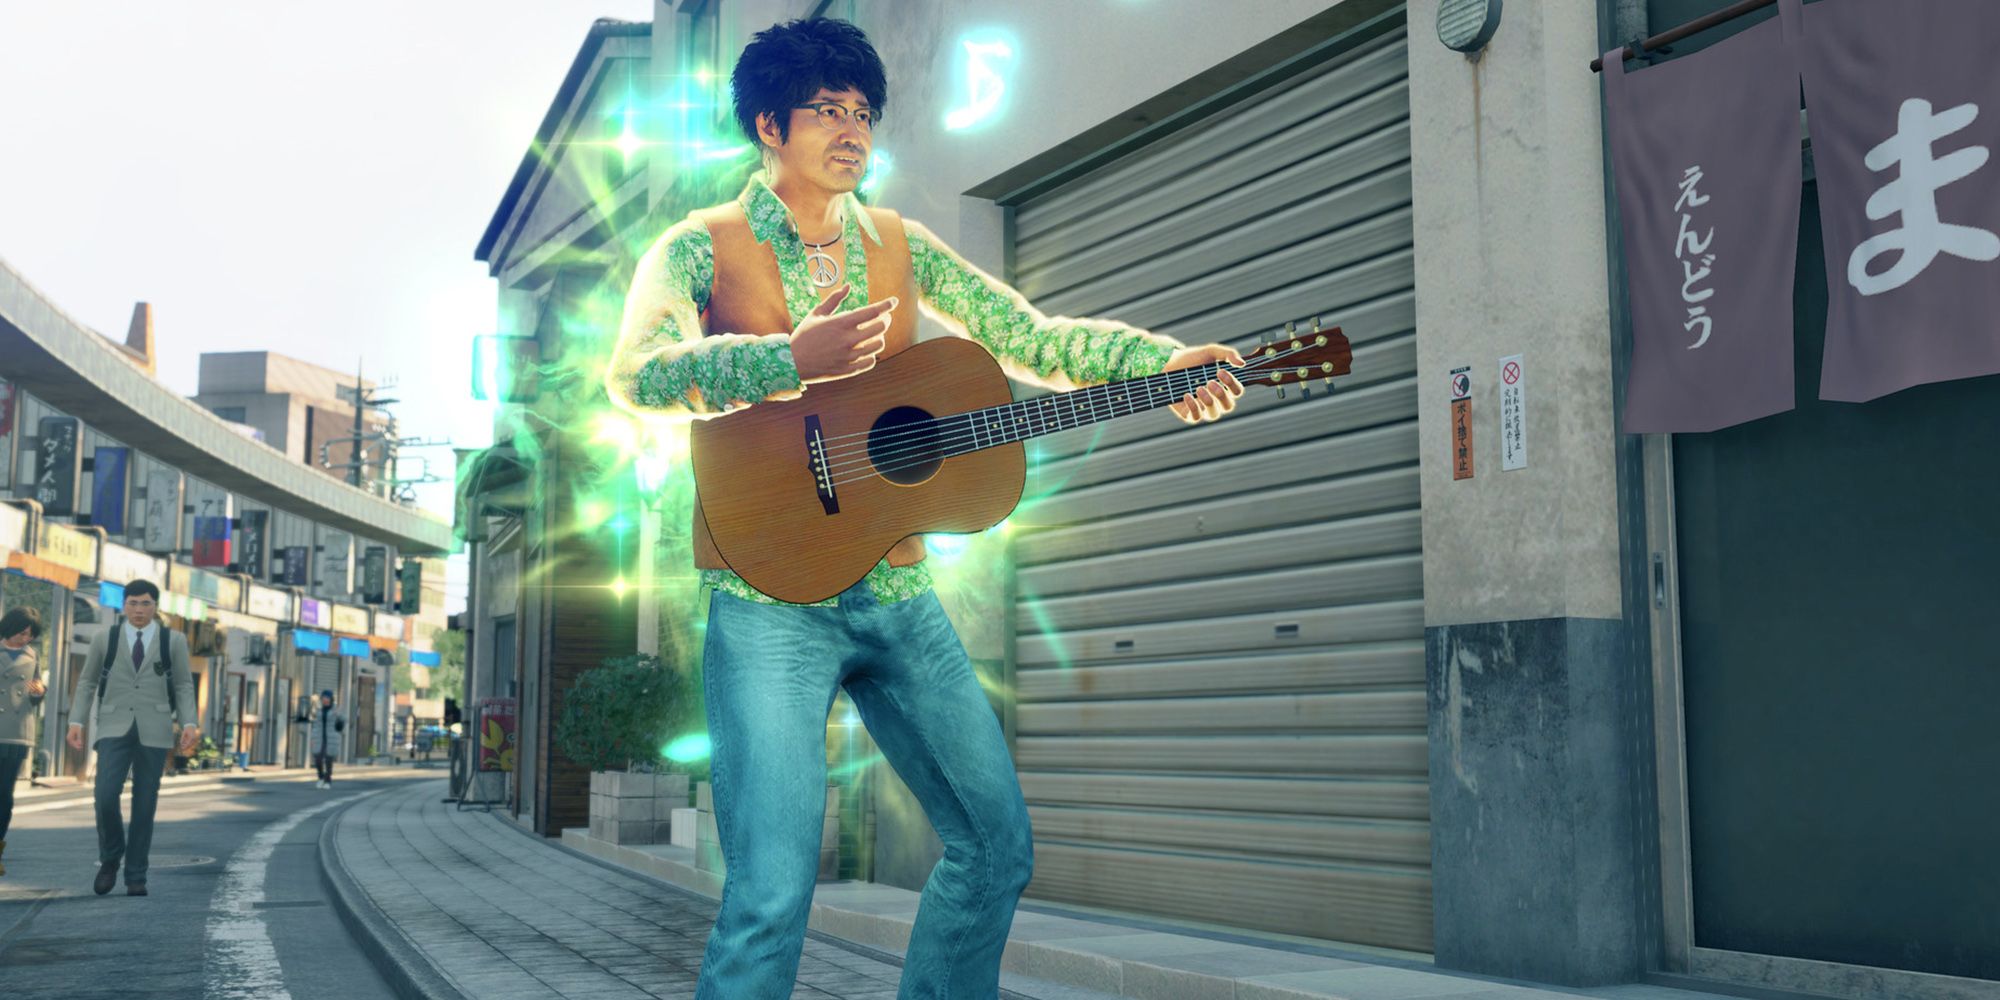 Dragon-like Yakuze - Namba who plays the guitar works as a musician to heal people